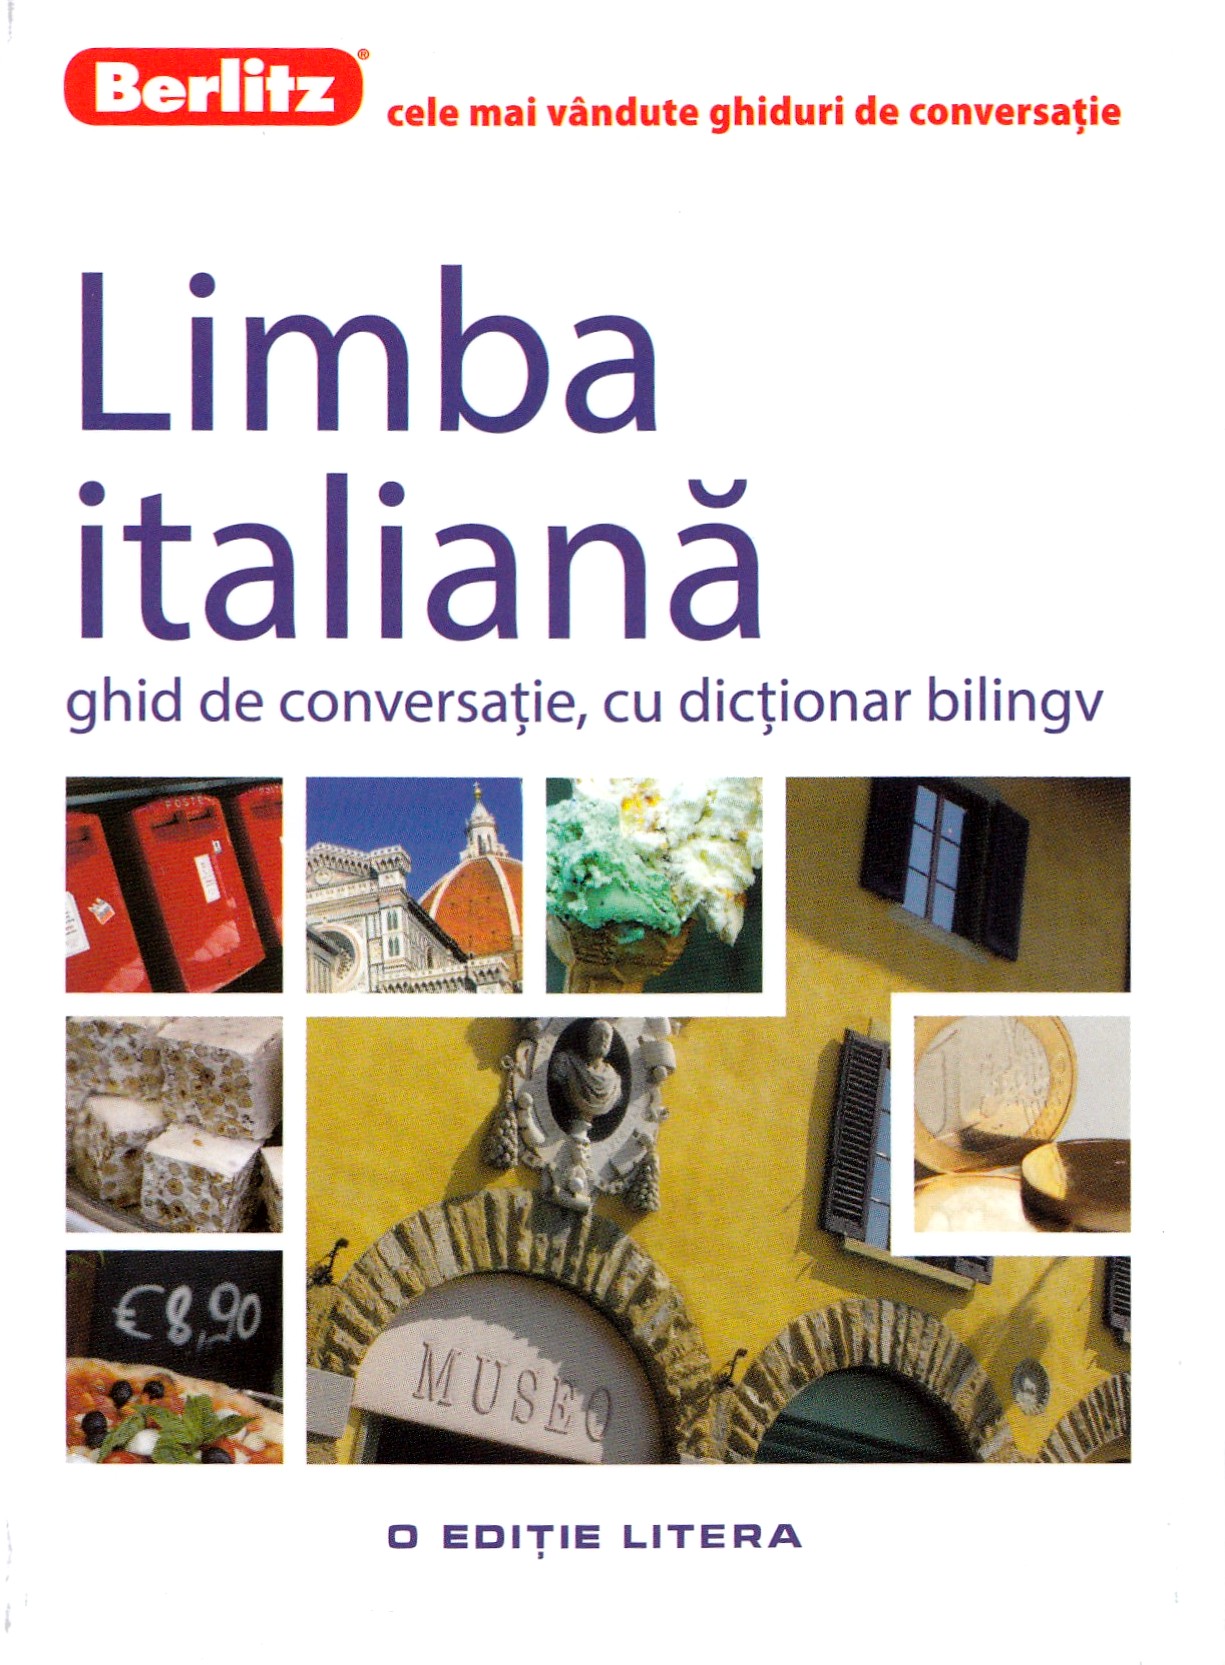 Berlitz - Limba italiana - Ghid de conversatie cu dictionar bilingv